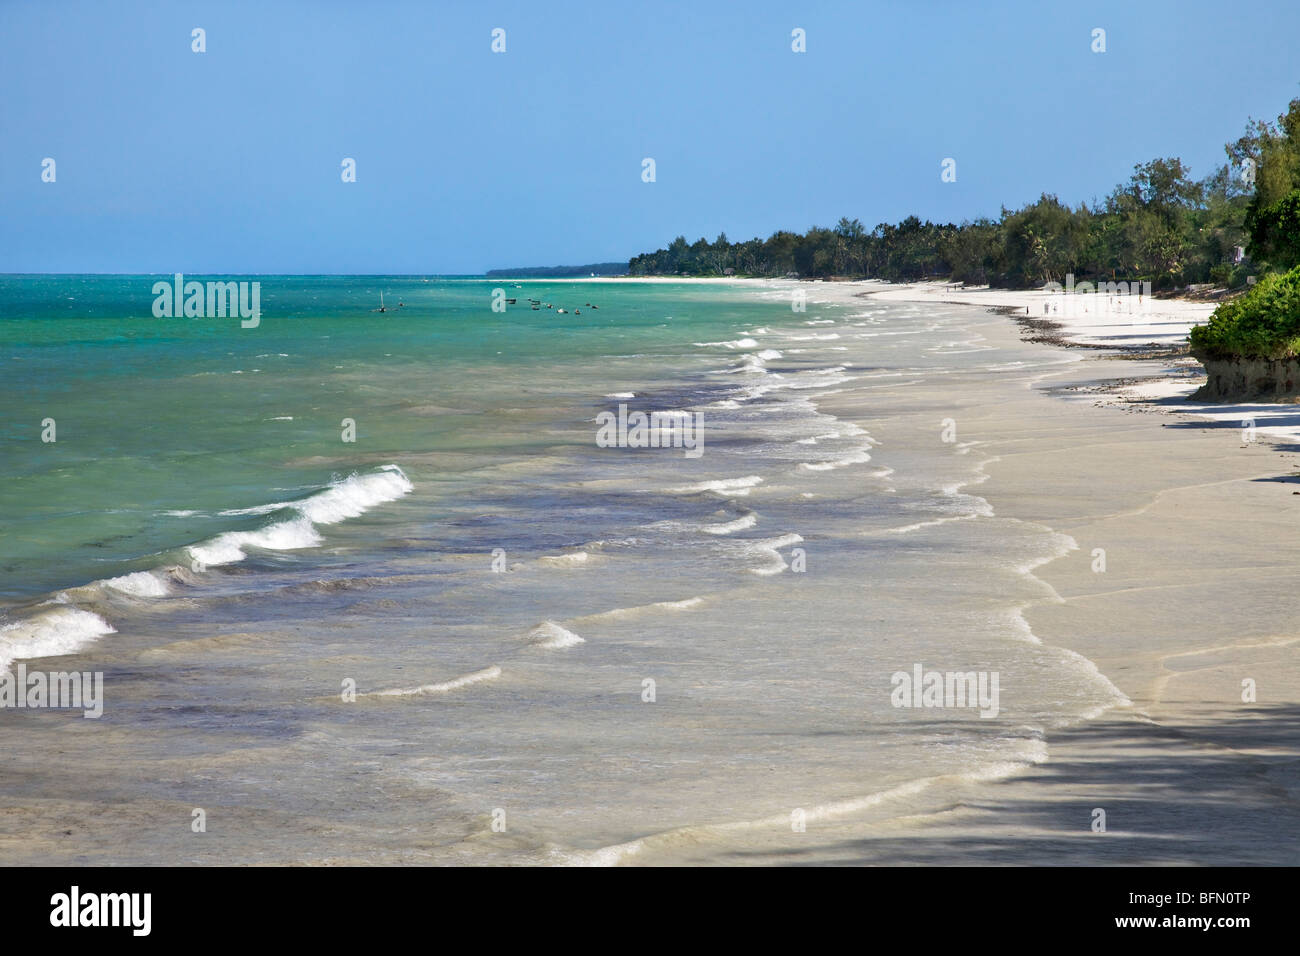 Kenia, Mombasa. Diani Beach Kenia Südküste s ist ein sehr beliebtes Touristenziel. Stockfoto